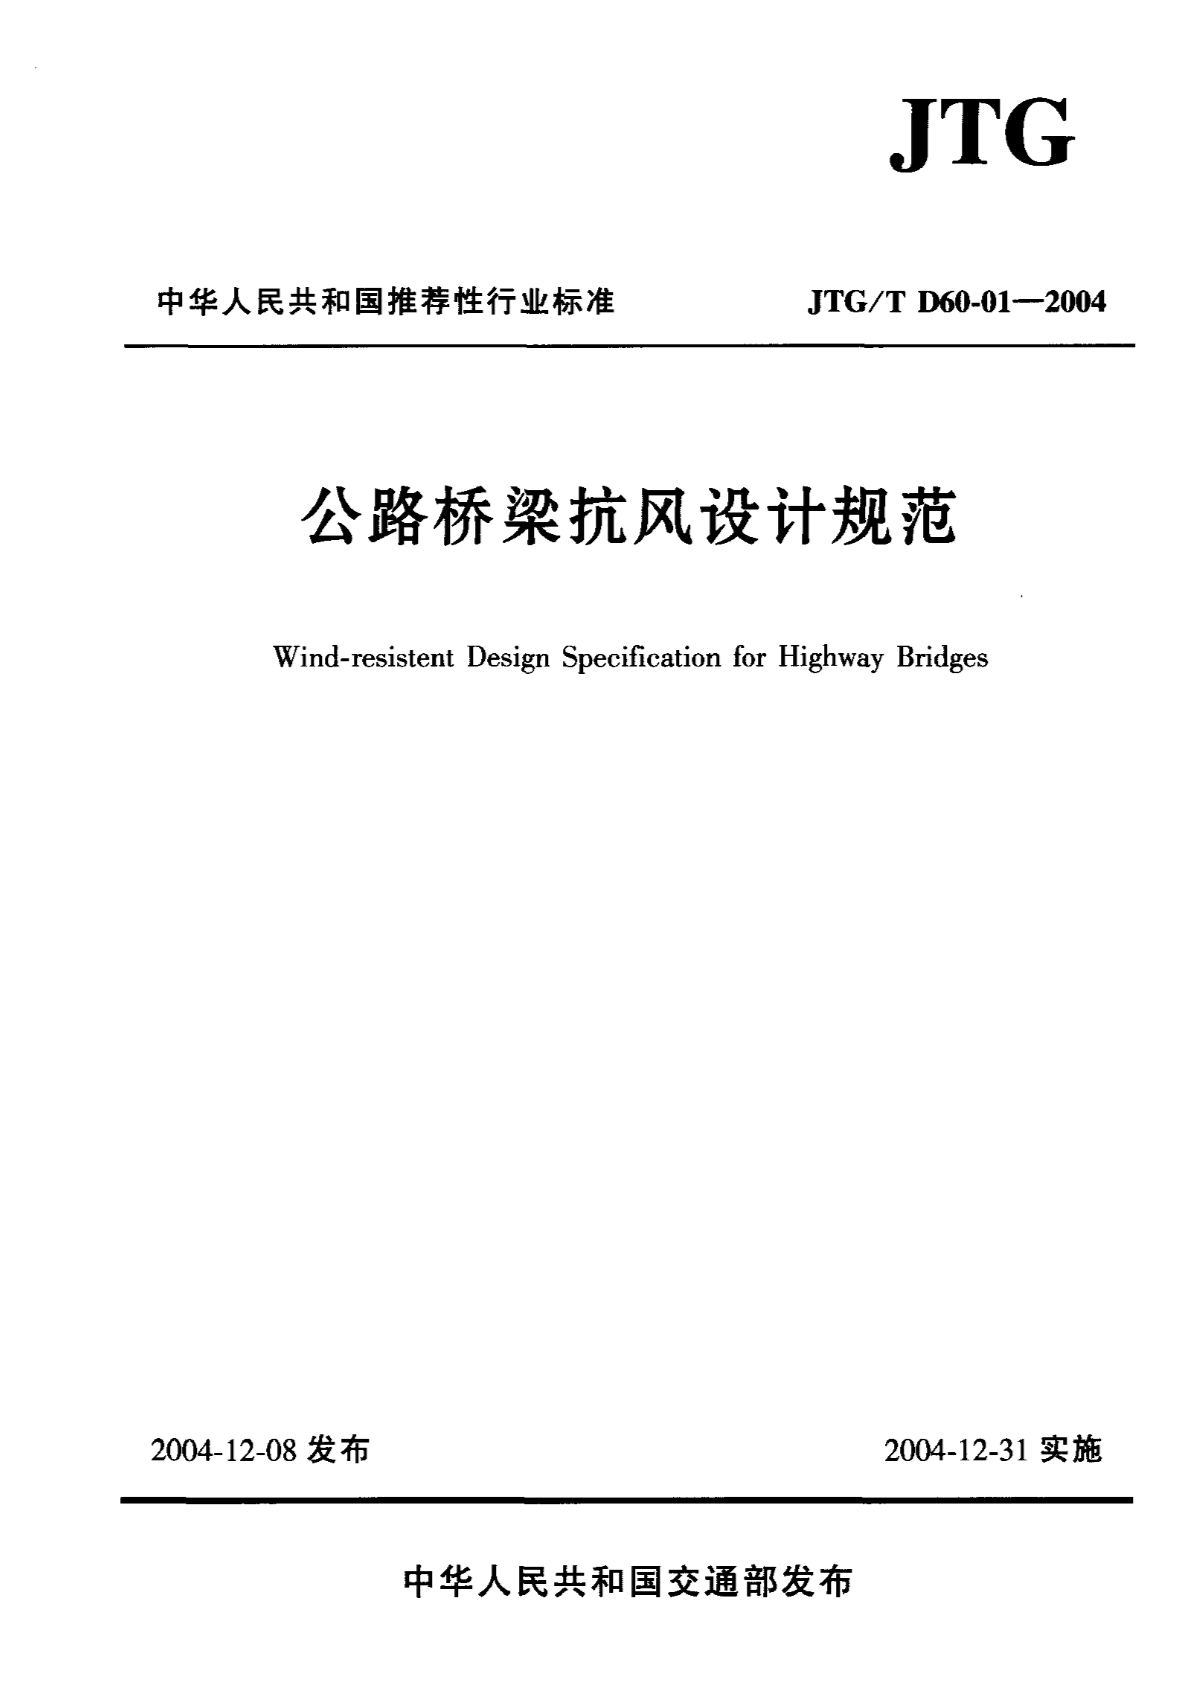 JTGTD60-01-2004公路桥梁抗风设计规范-图一